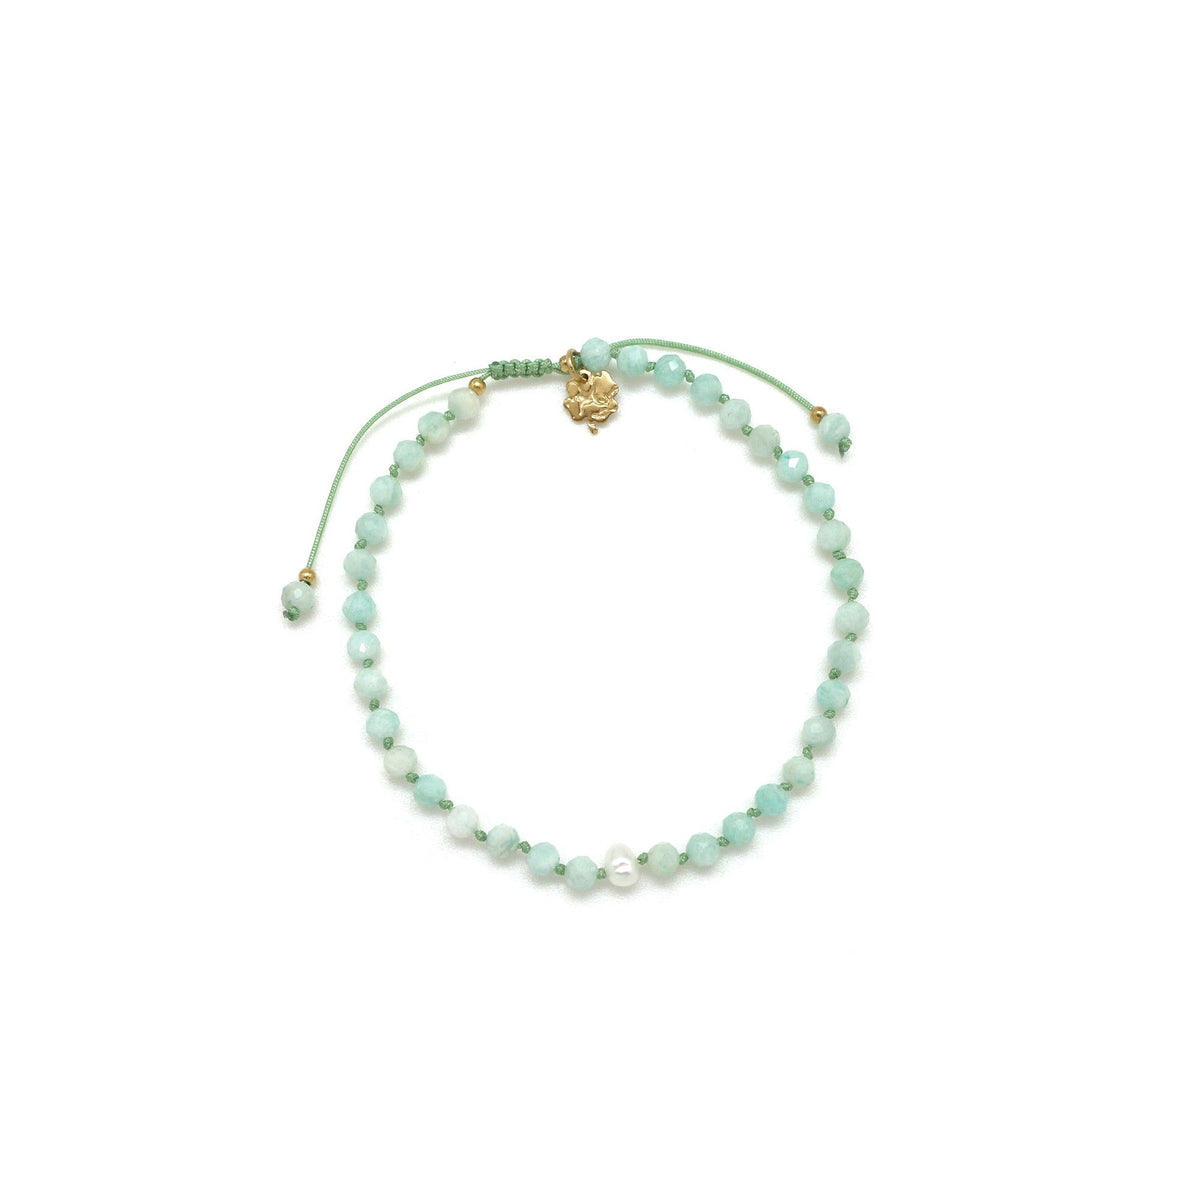 Adjustable amazonite bracelet with pearl